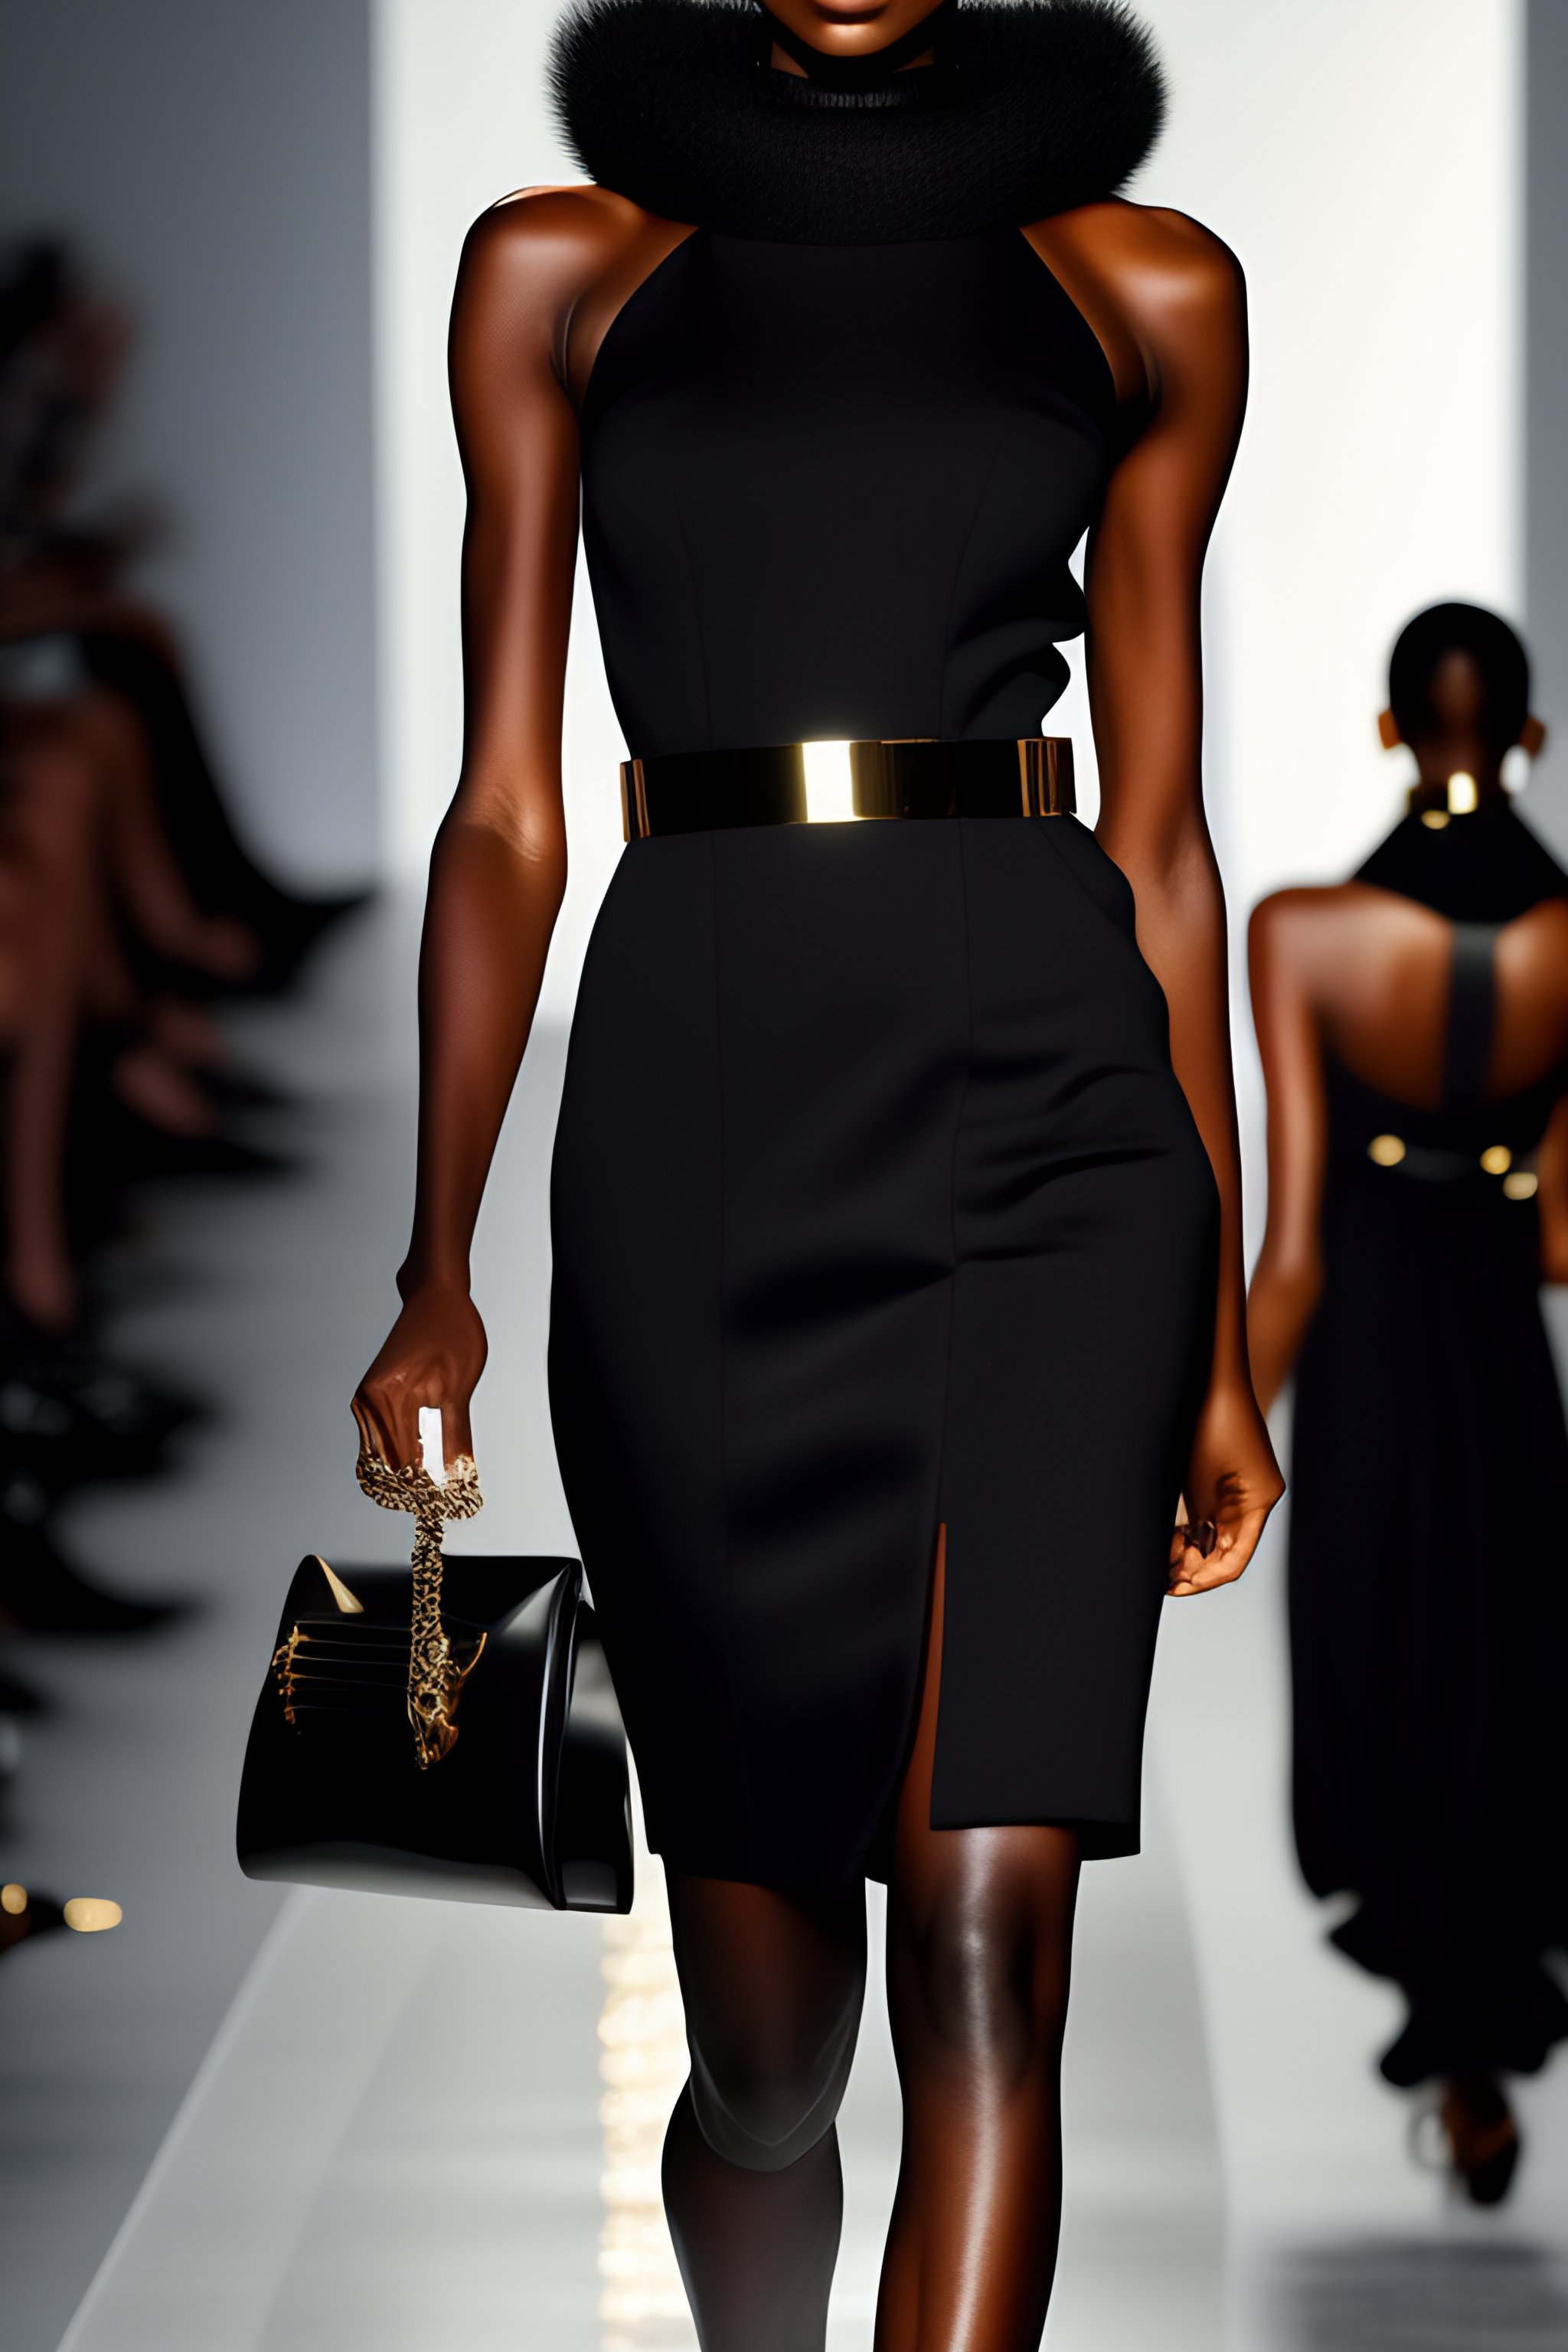 Lexica - Dress futuristic black, style, model, casual